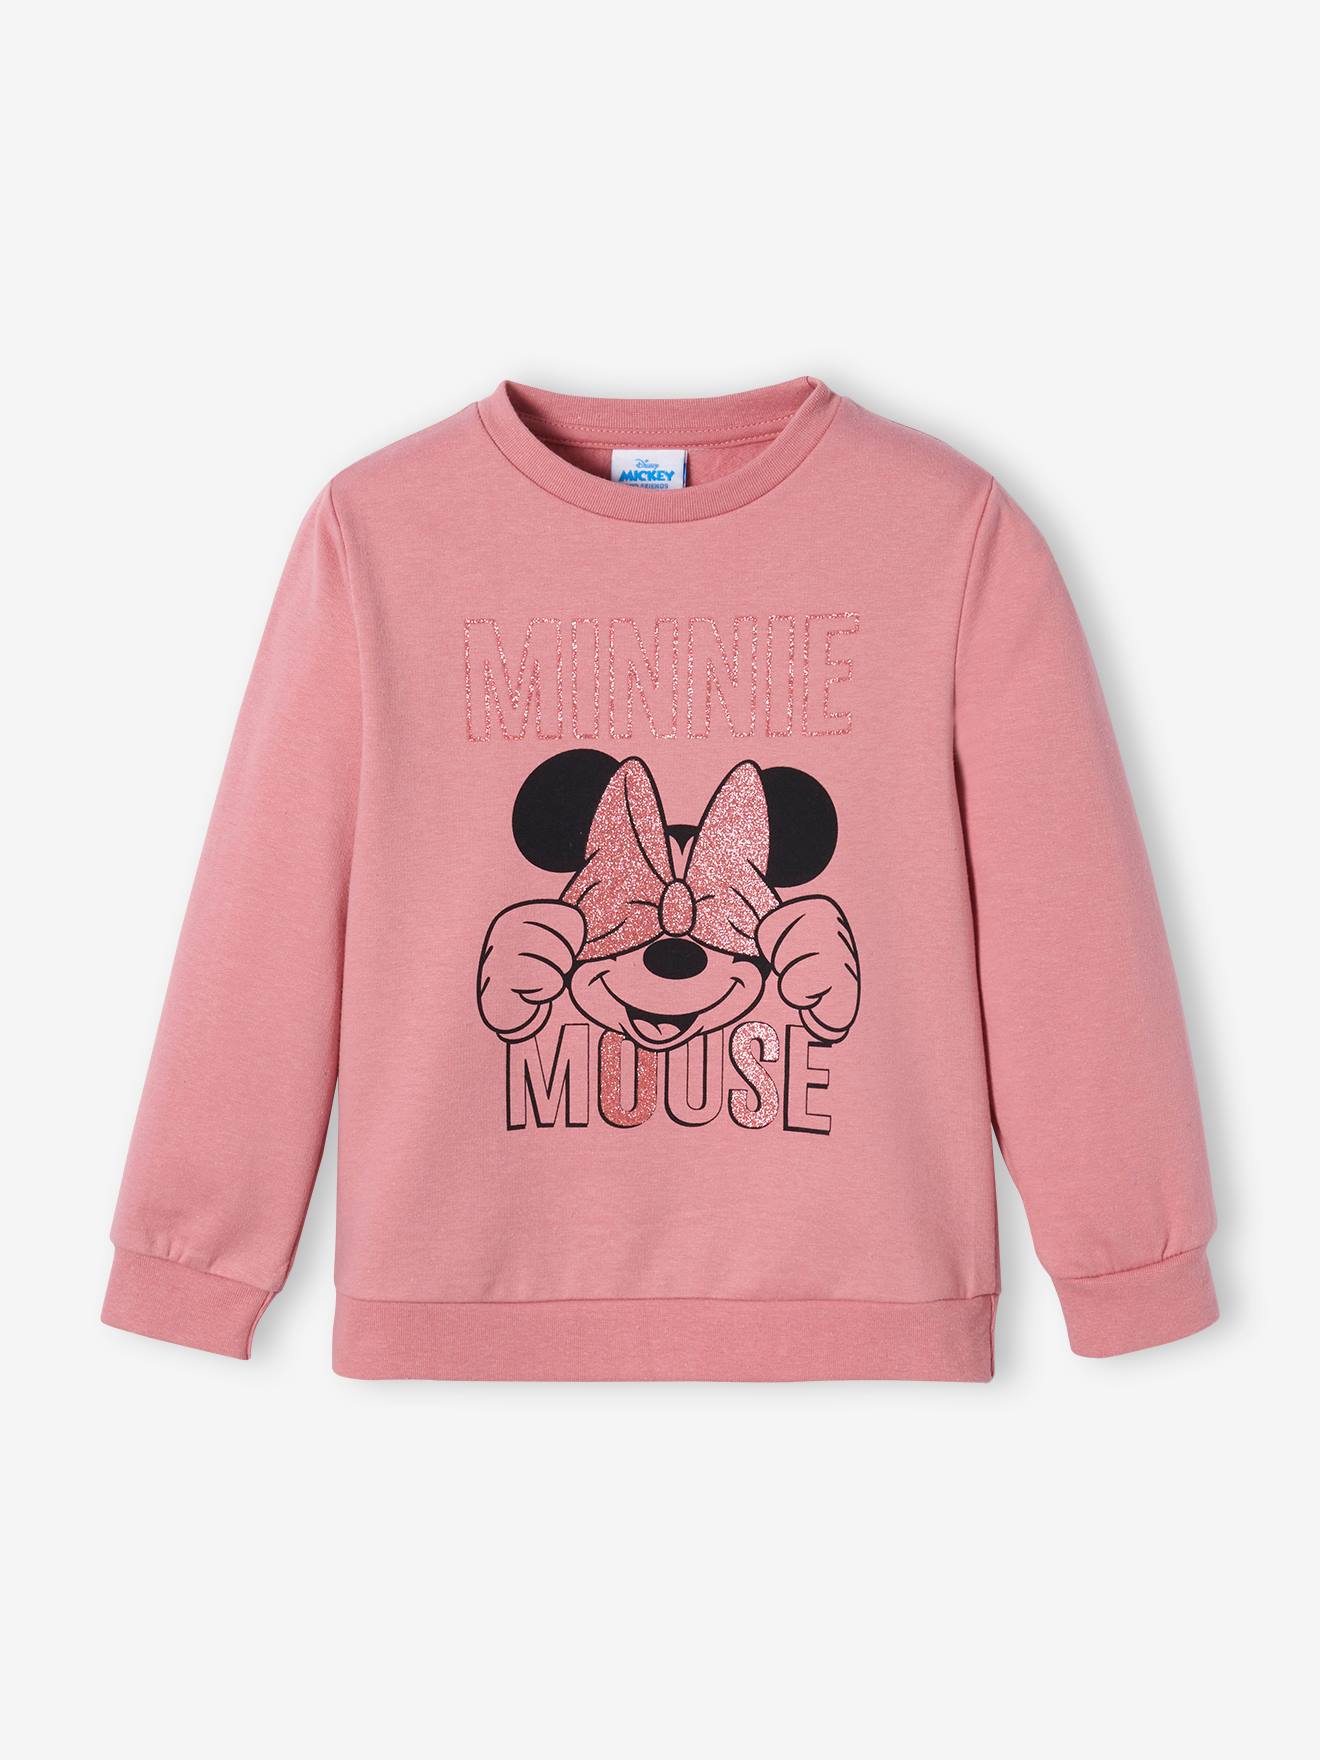 NEU! Disney Minnie Mouse Top T-Shirt Shirt Glitzer Baumwolle weiß  80 86 92 